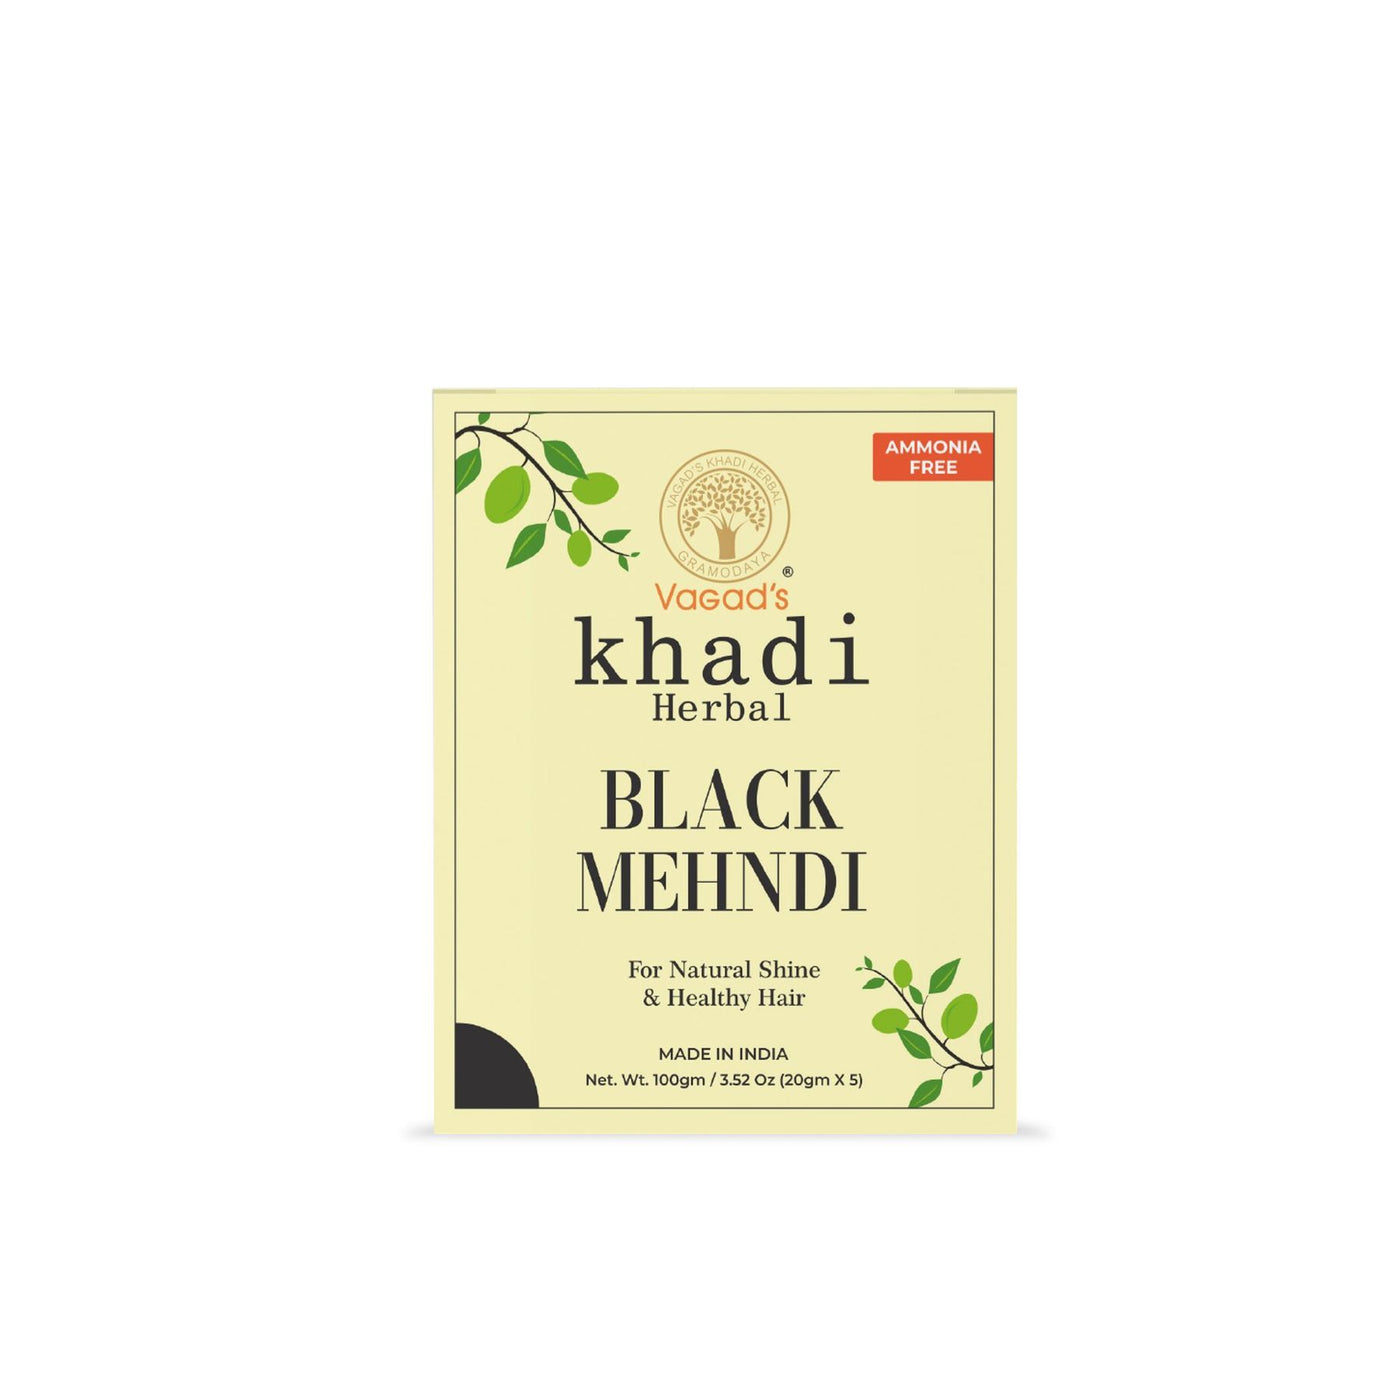 Vagad's Khadi Black Mehndi (Pack of 3)